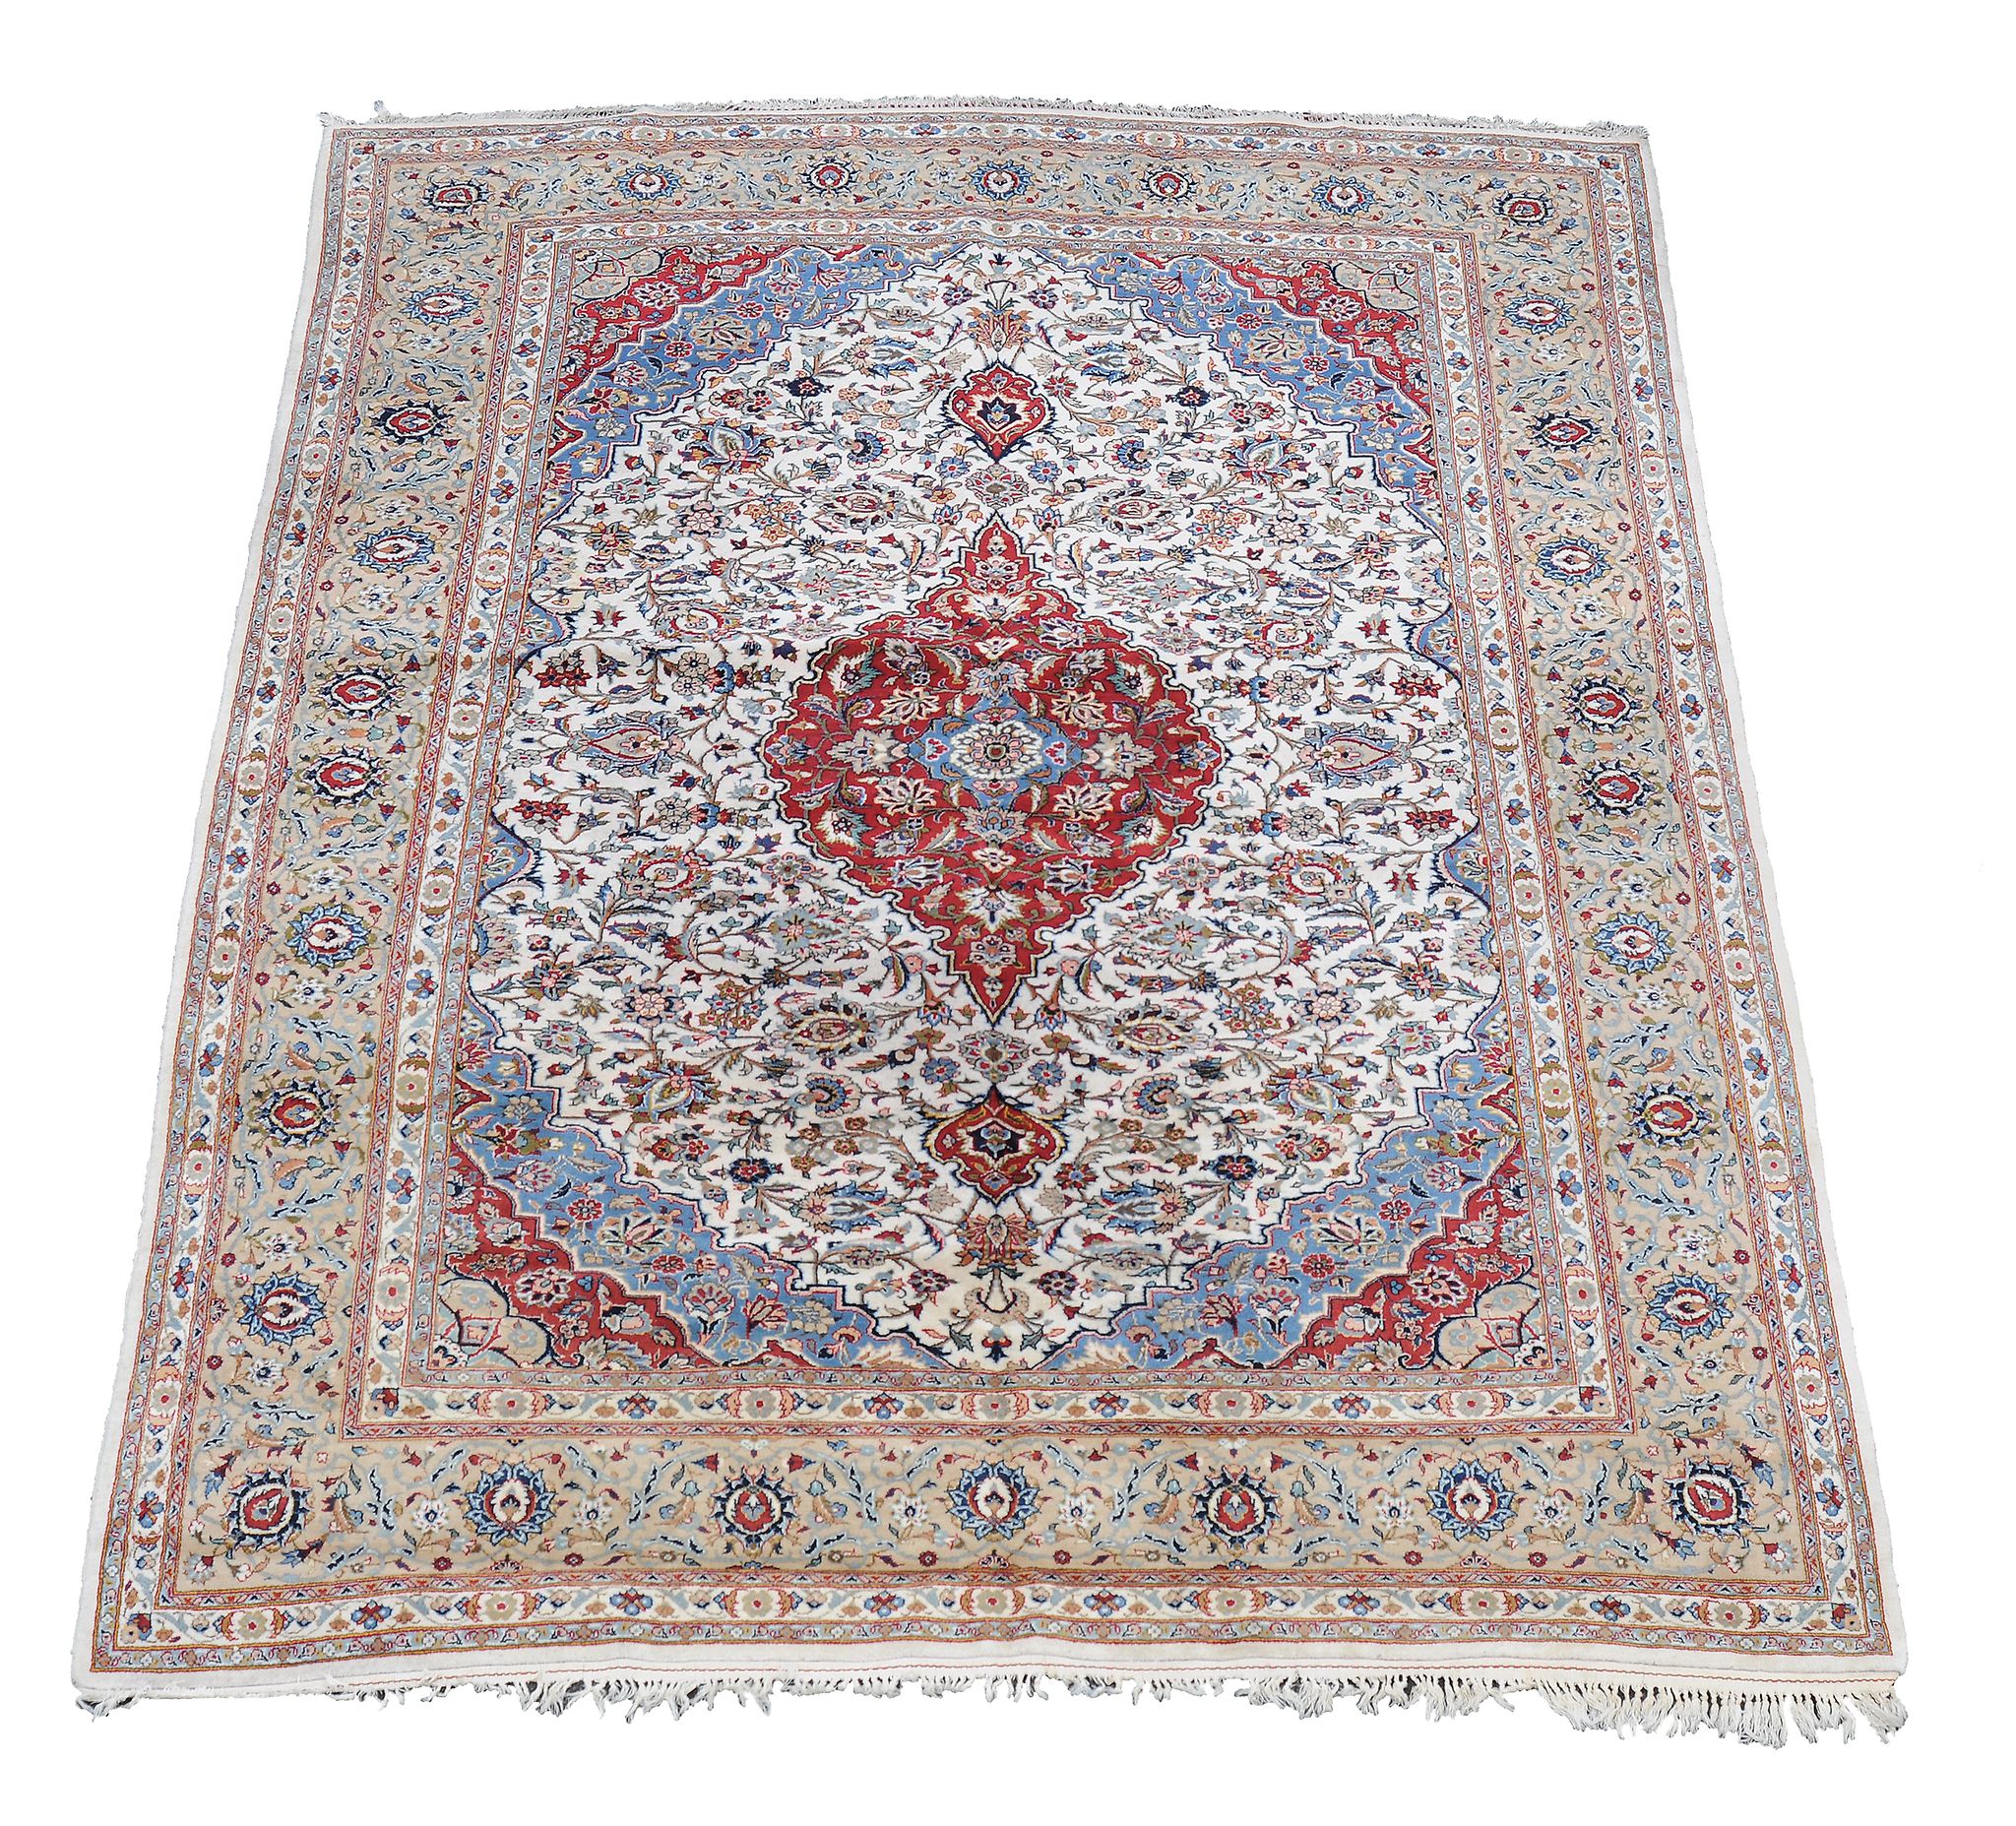 A Kashan carpet , approximately 330cm x 240cm  A Kashan carpet  , approximately 330cm x 240cm